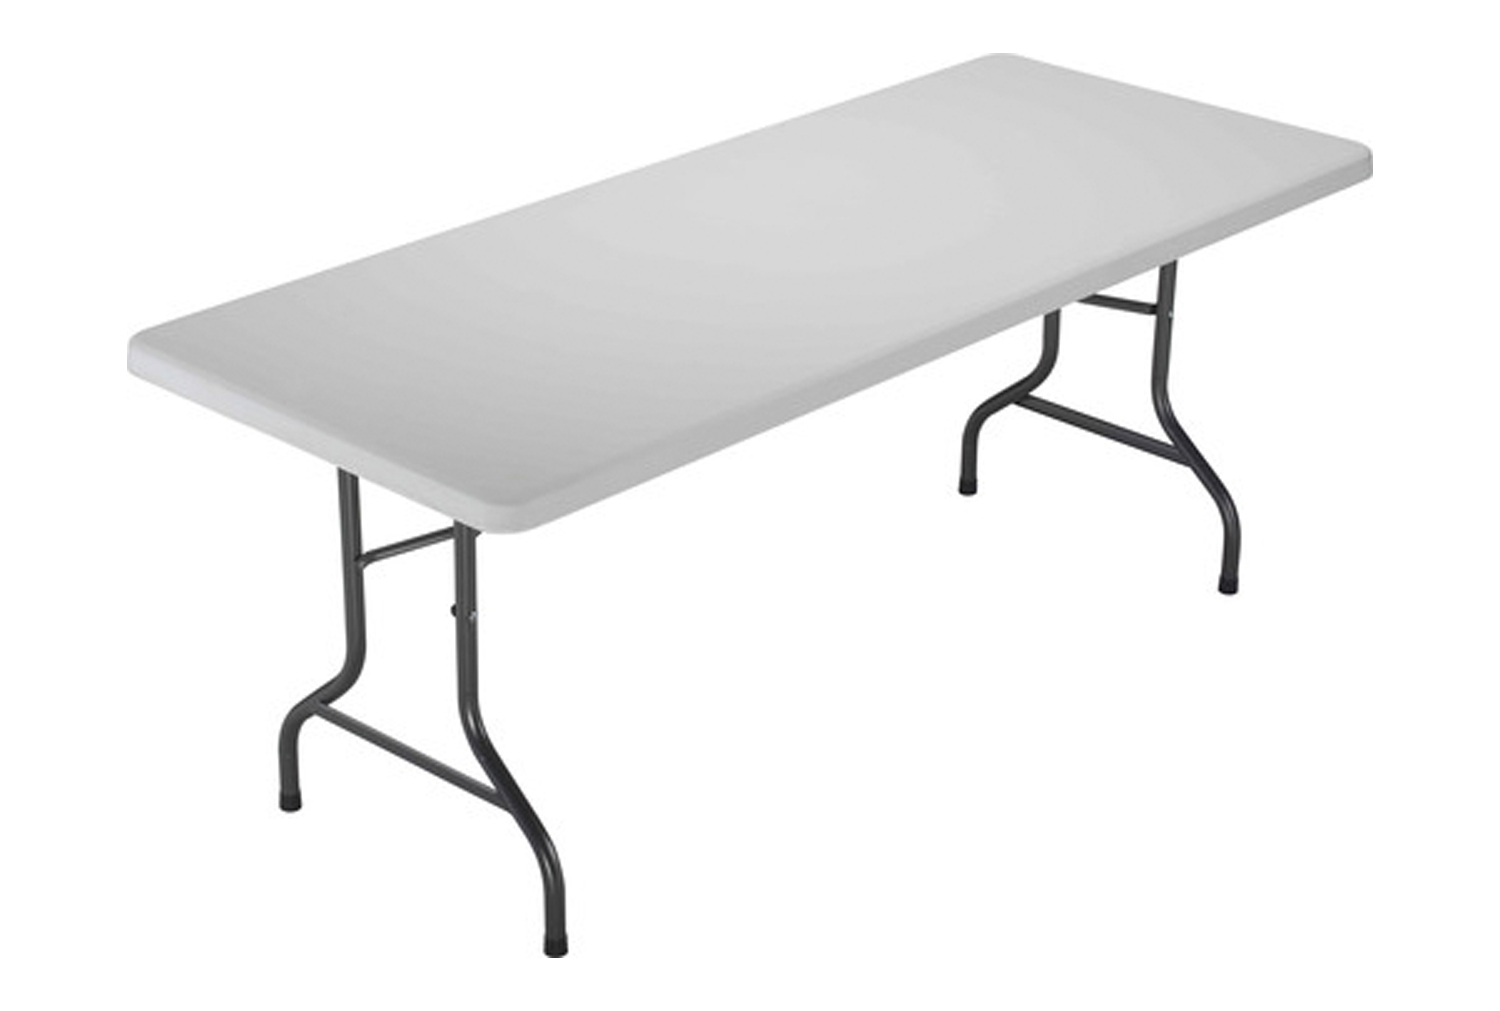 Bohan Plastic Rectangular Folding Table, 121wx60dx74h (cm), White, Express Delivery